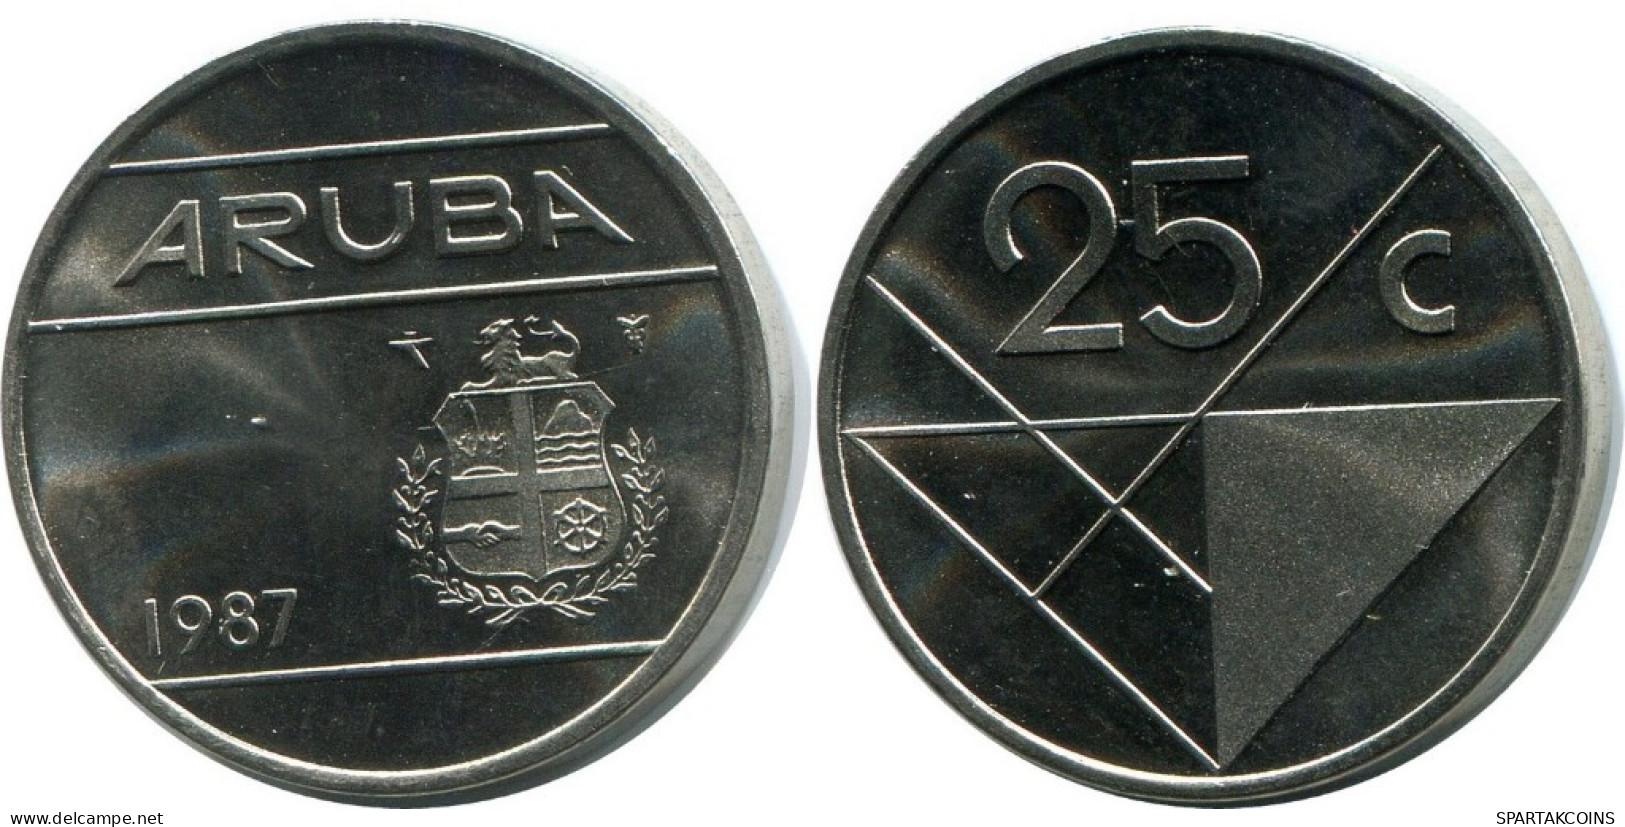 25 CENTS 1987 ARUBA Münze (From BU Mint Set) #AH067.D.A - Aruba